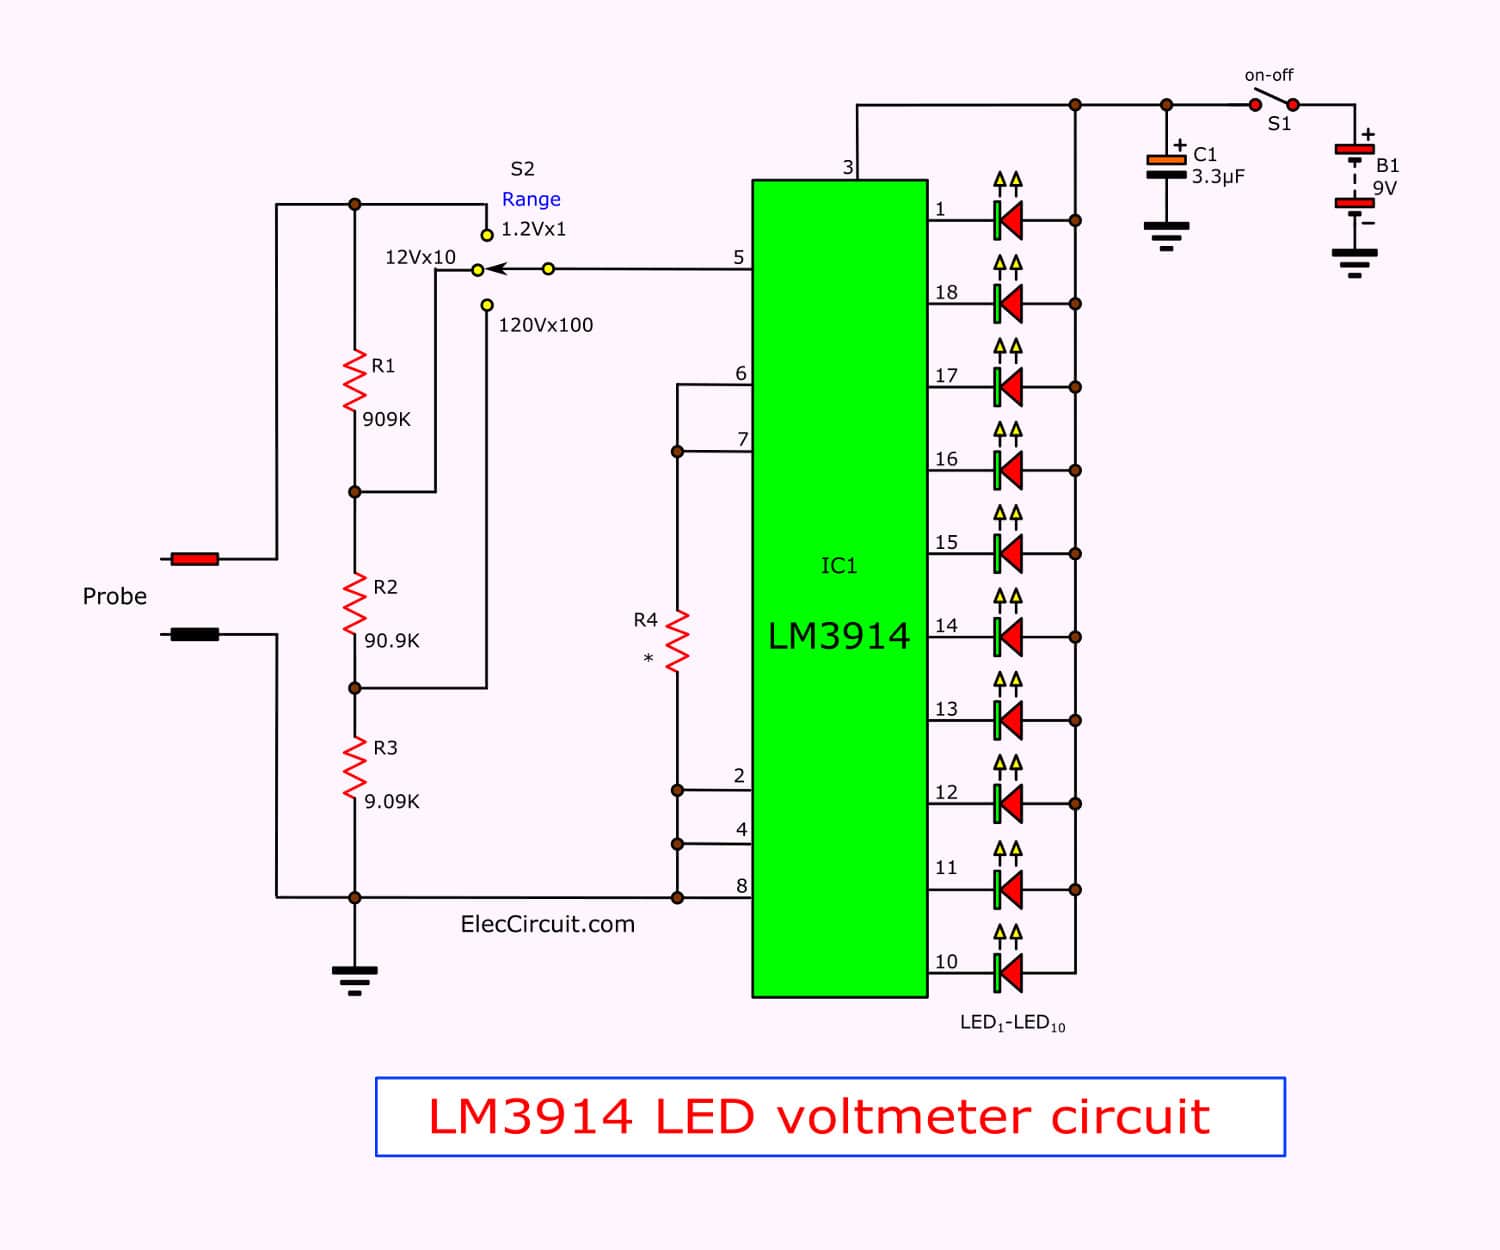 Simple LED voltmeter circuit using LM3914 - ElecCircuit